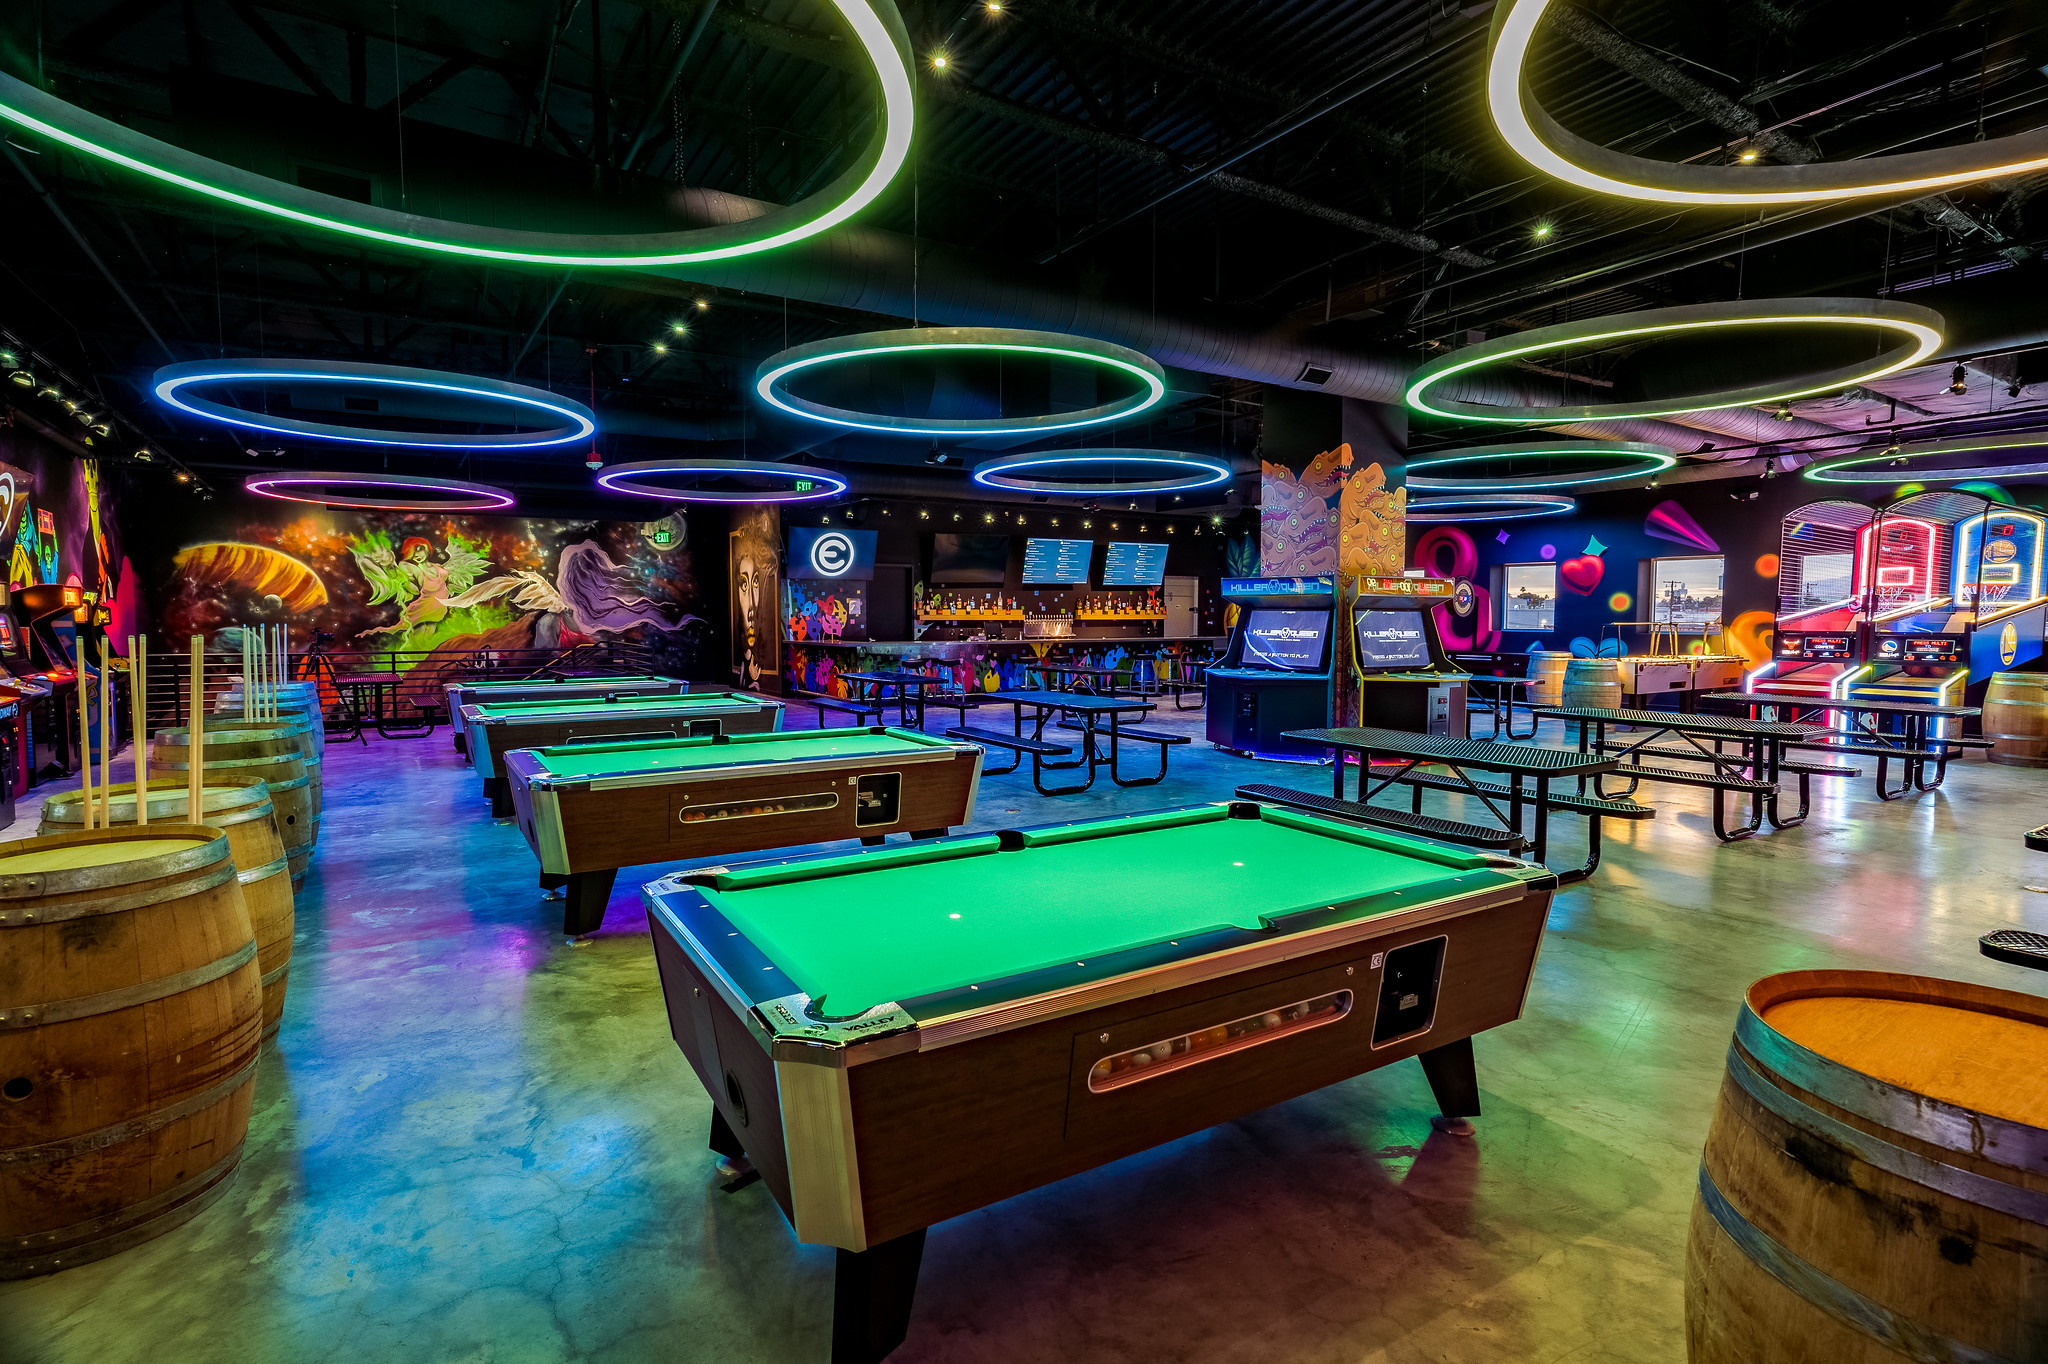 Emporium Arcade Bar + Venue Las Vegas now open at Area15 « Amusement Today